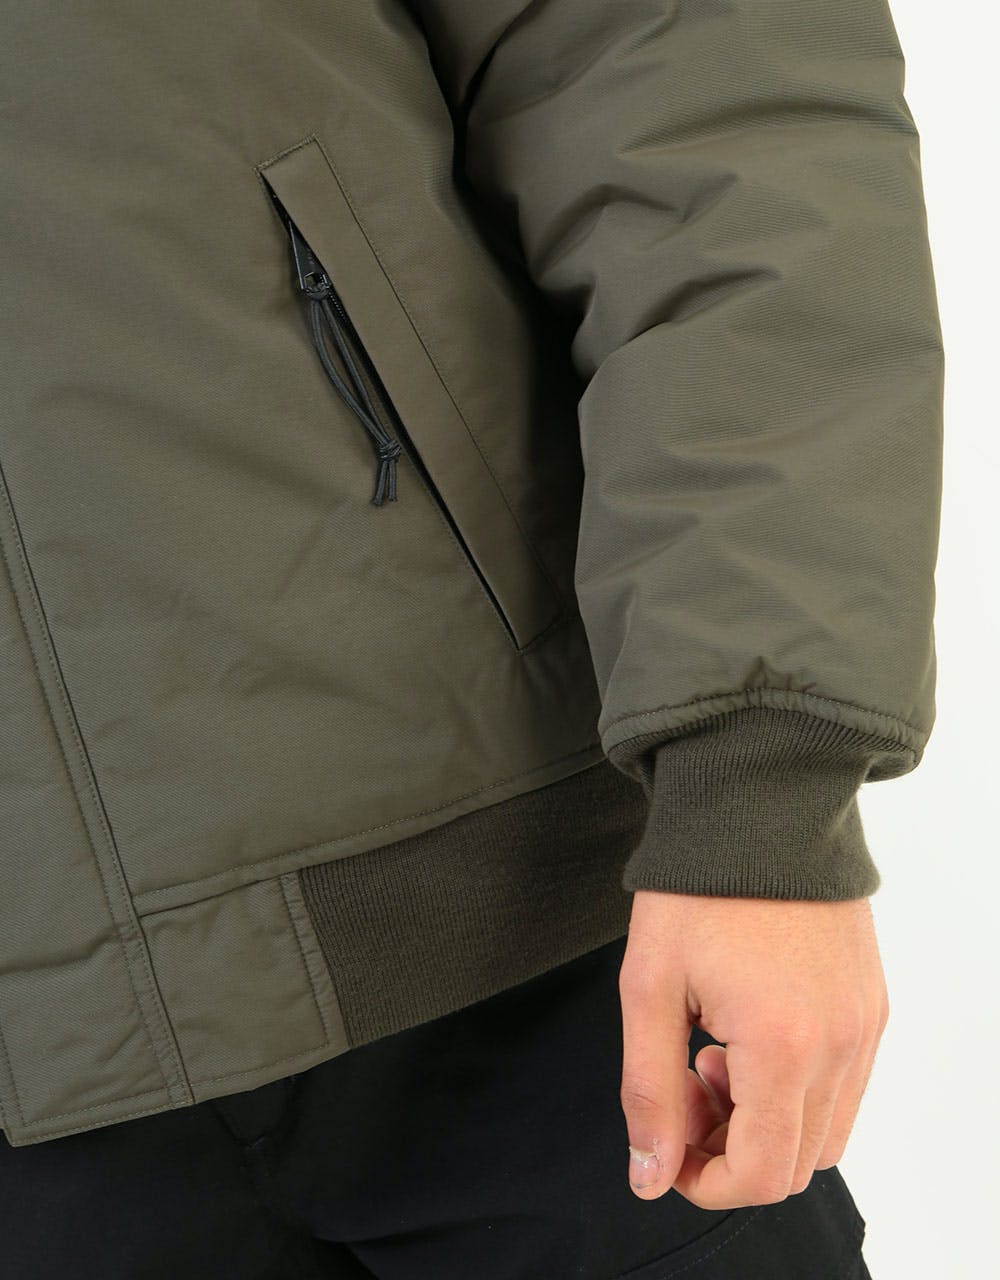 Carhartt WIP Kodiak Blouson Jacket - Cypress/Black